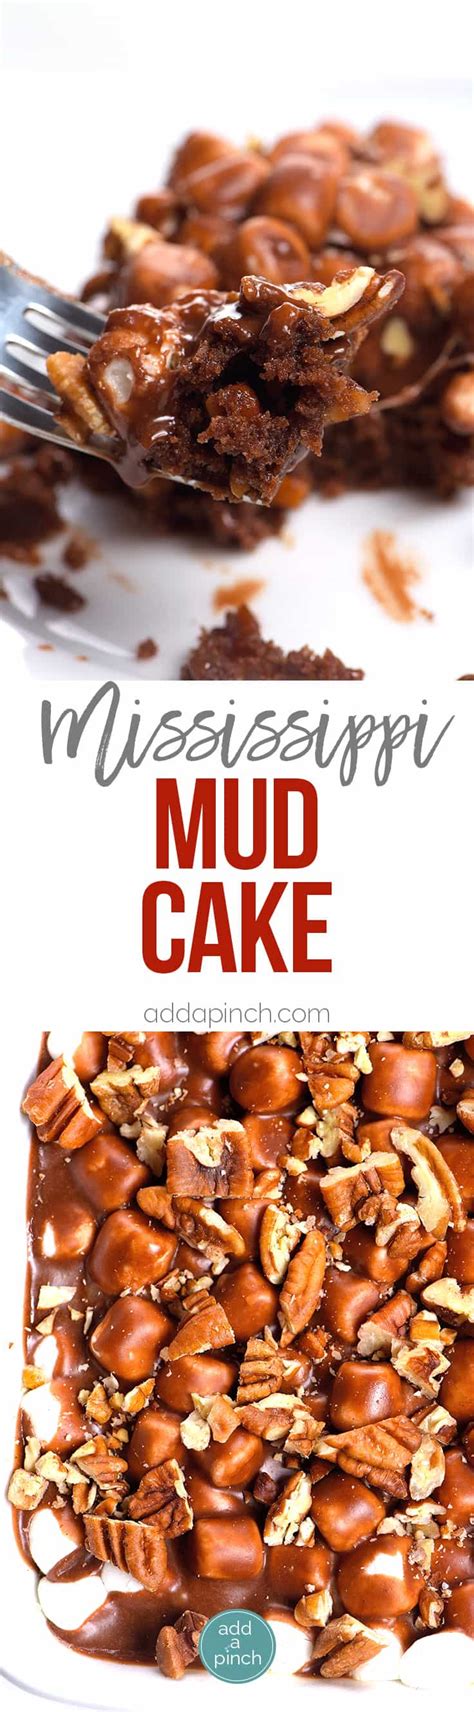 mississippi mud cake recipe add  pinch